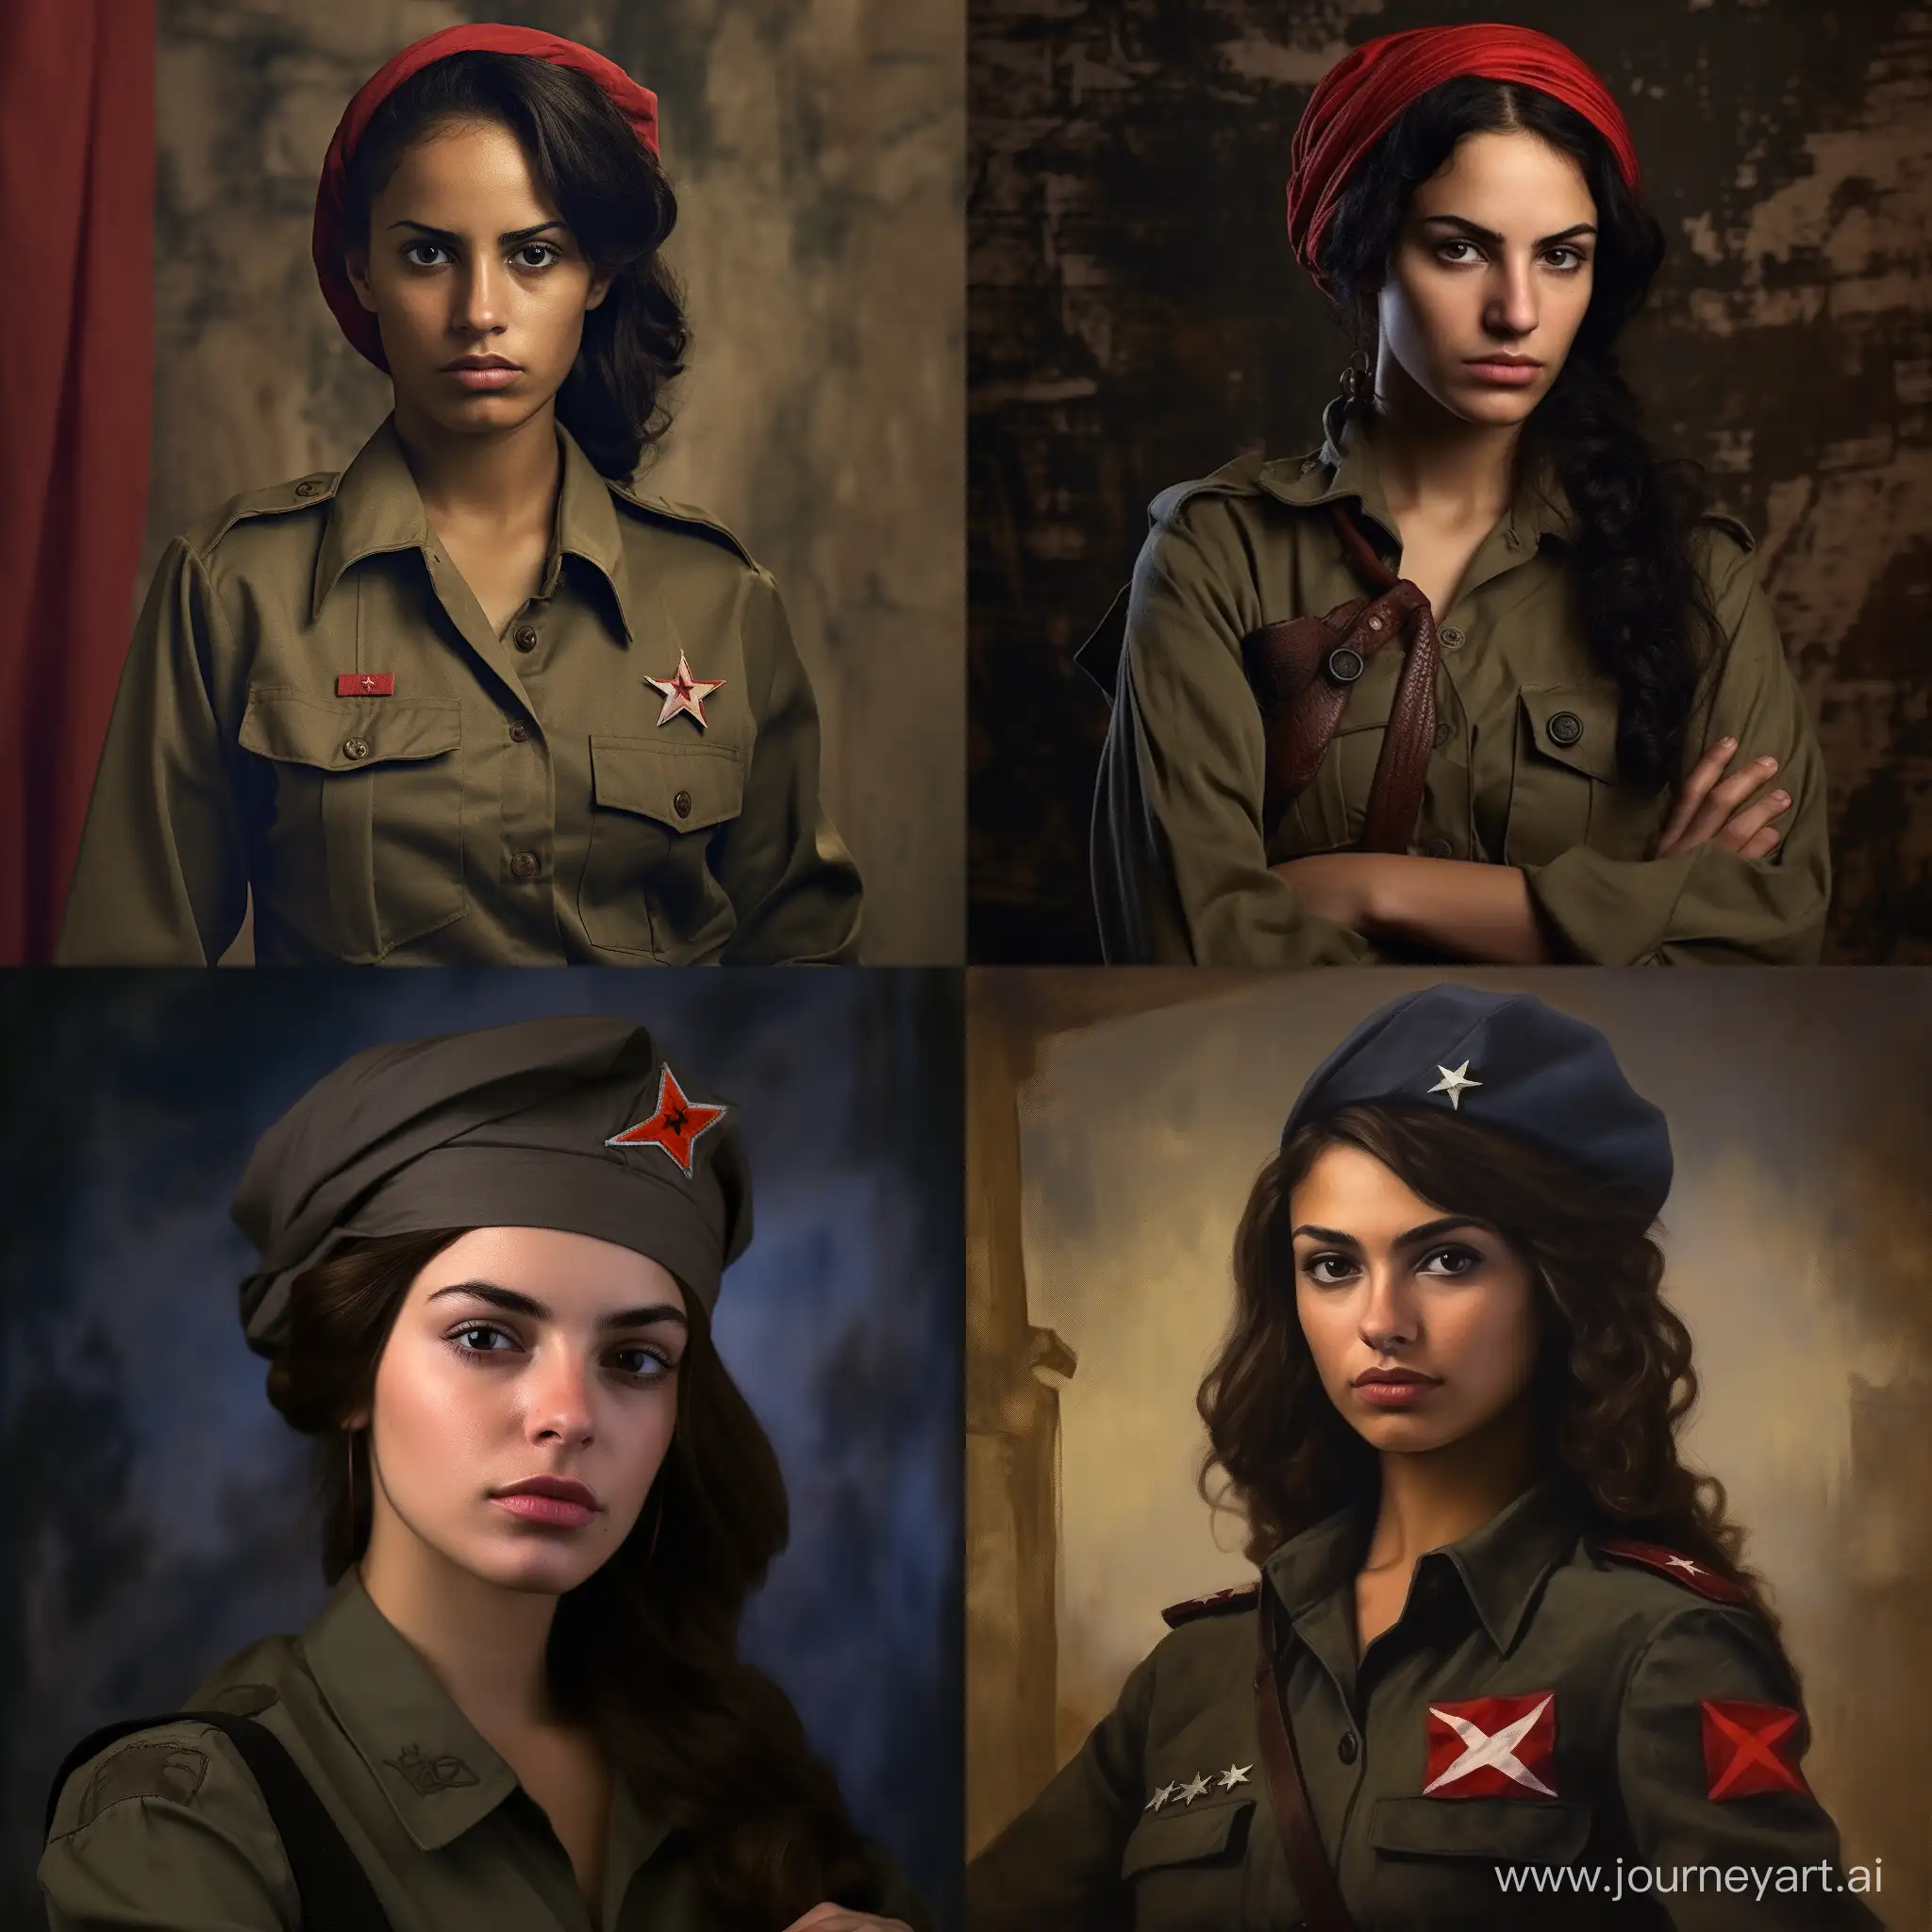 кубинский,революционер,женщина,реалистичное фото, фуражка, форма,